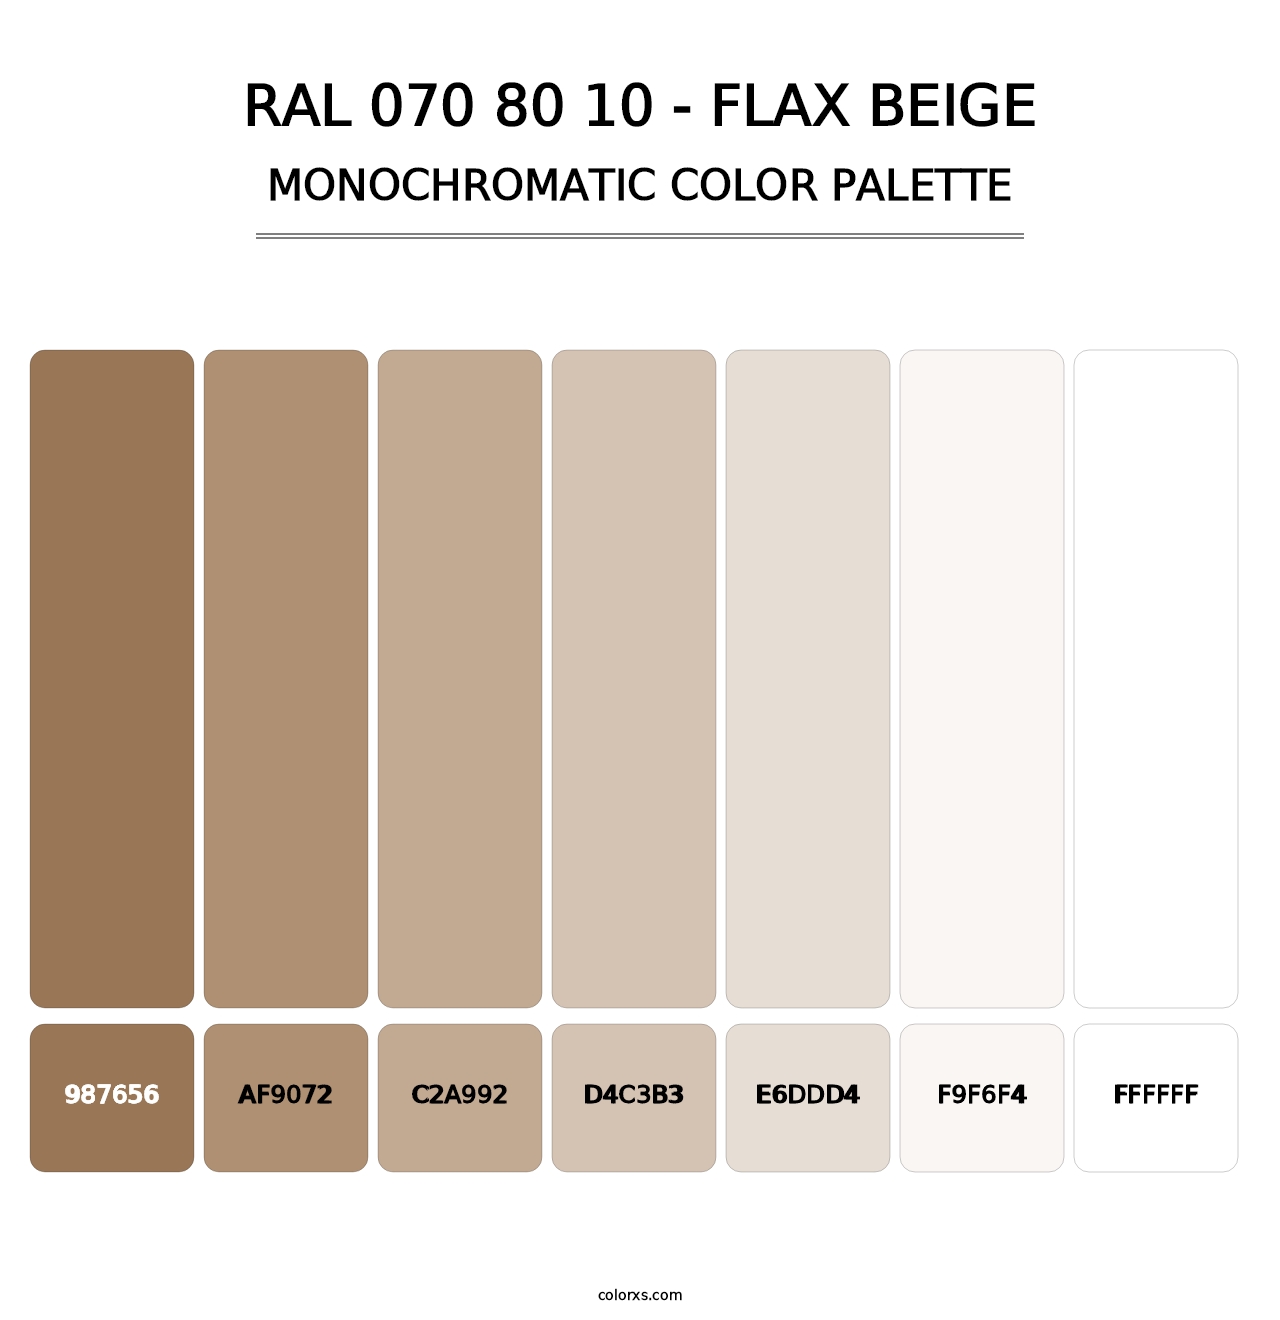 RAL 070 80 10 - Flax Beige - Monochromatic Color Palette